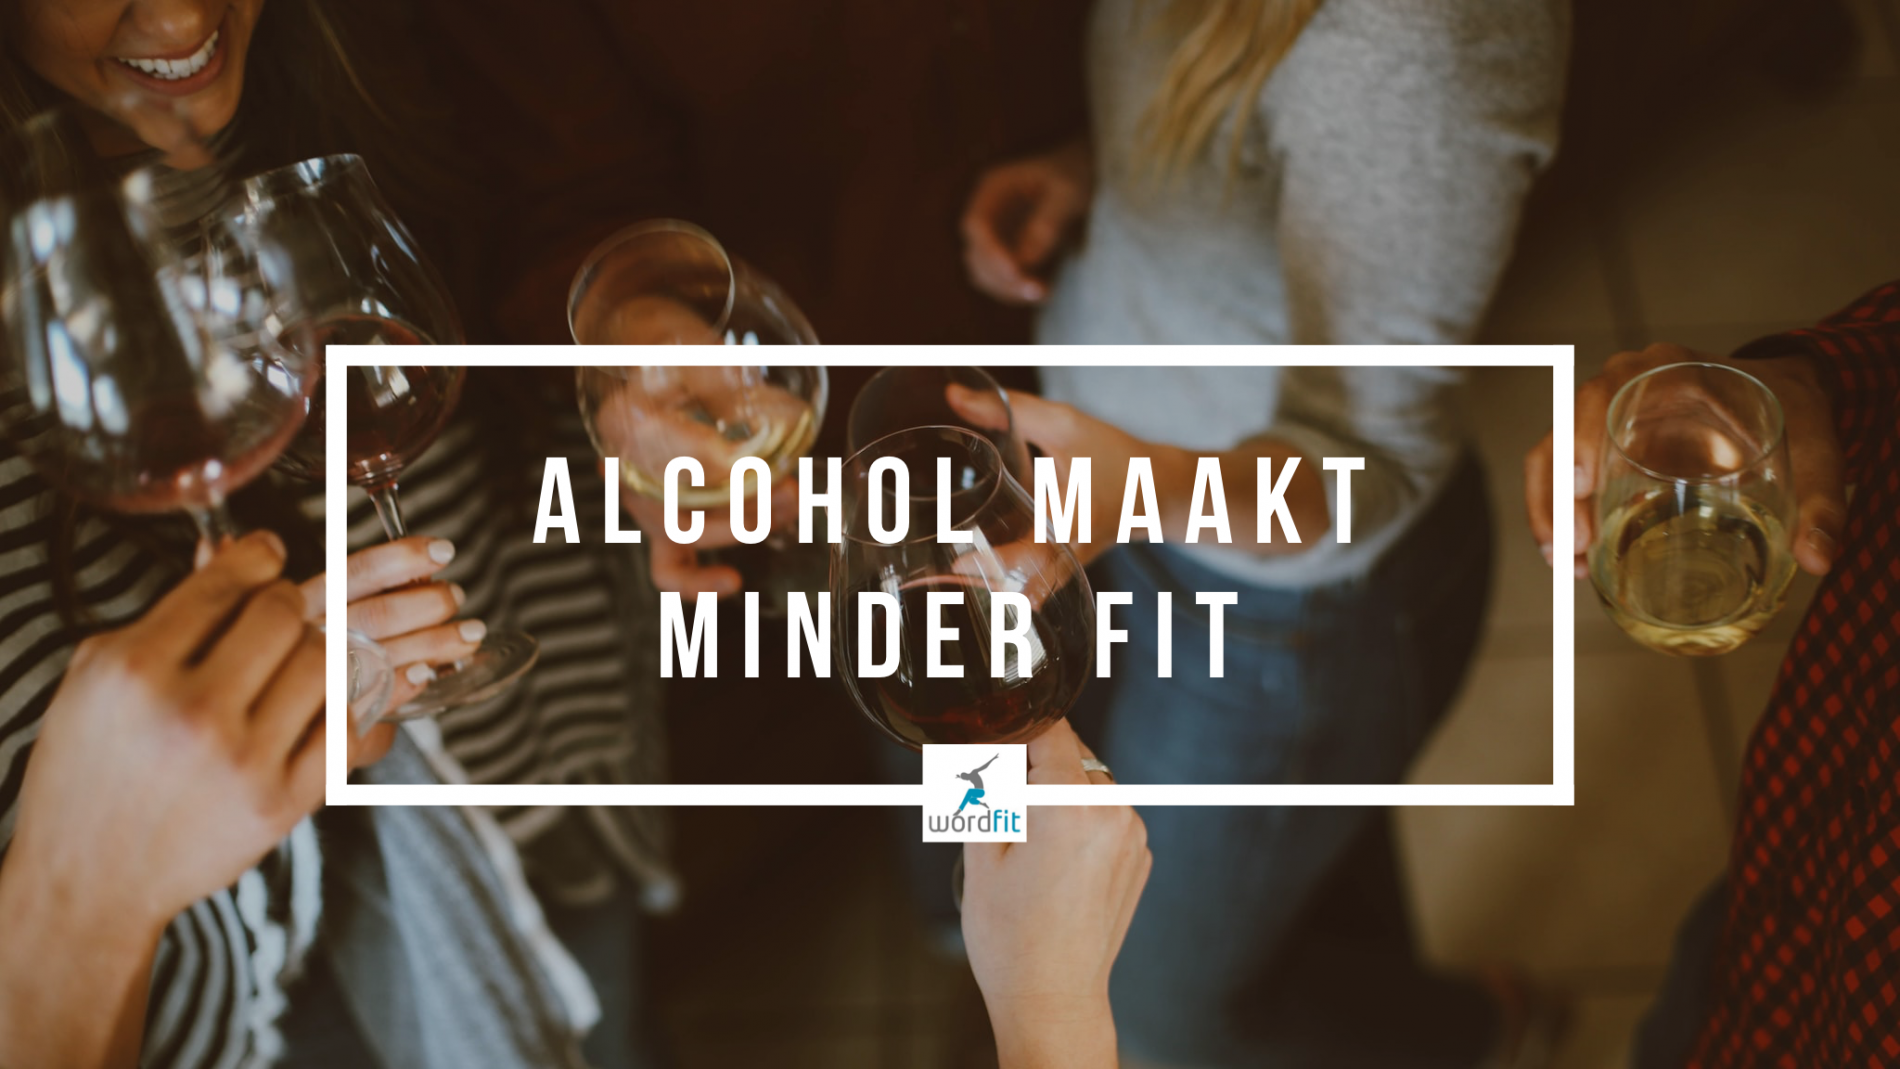 Alcohol maakt minder fit WordFit Lifecoaching